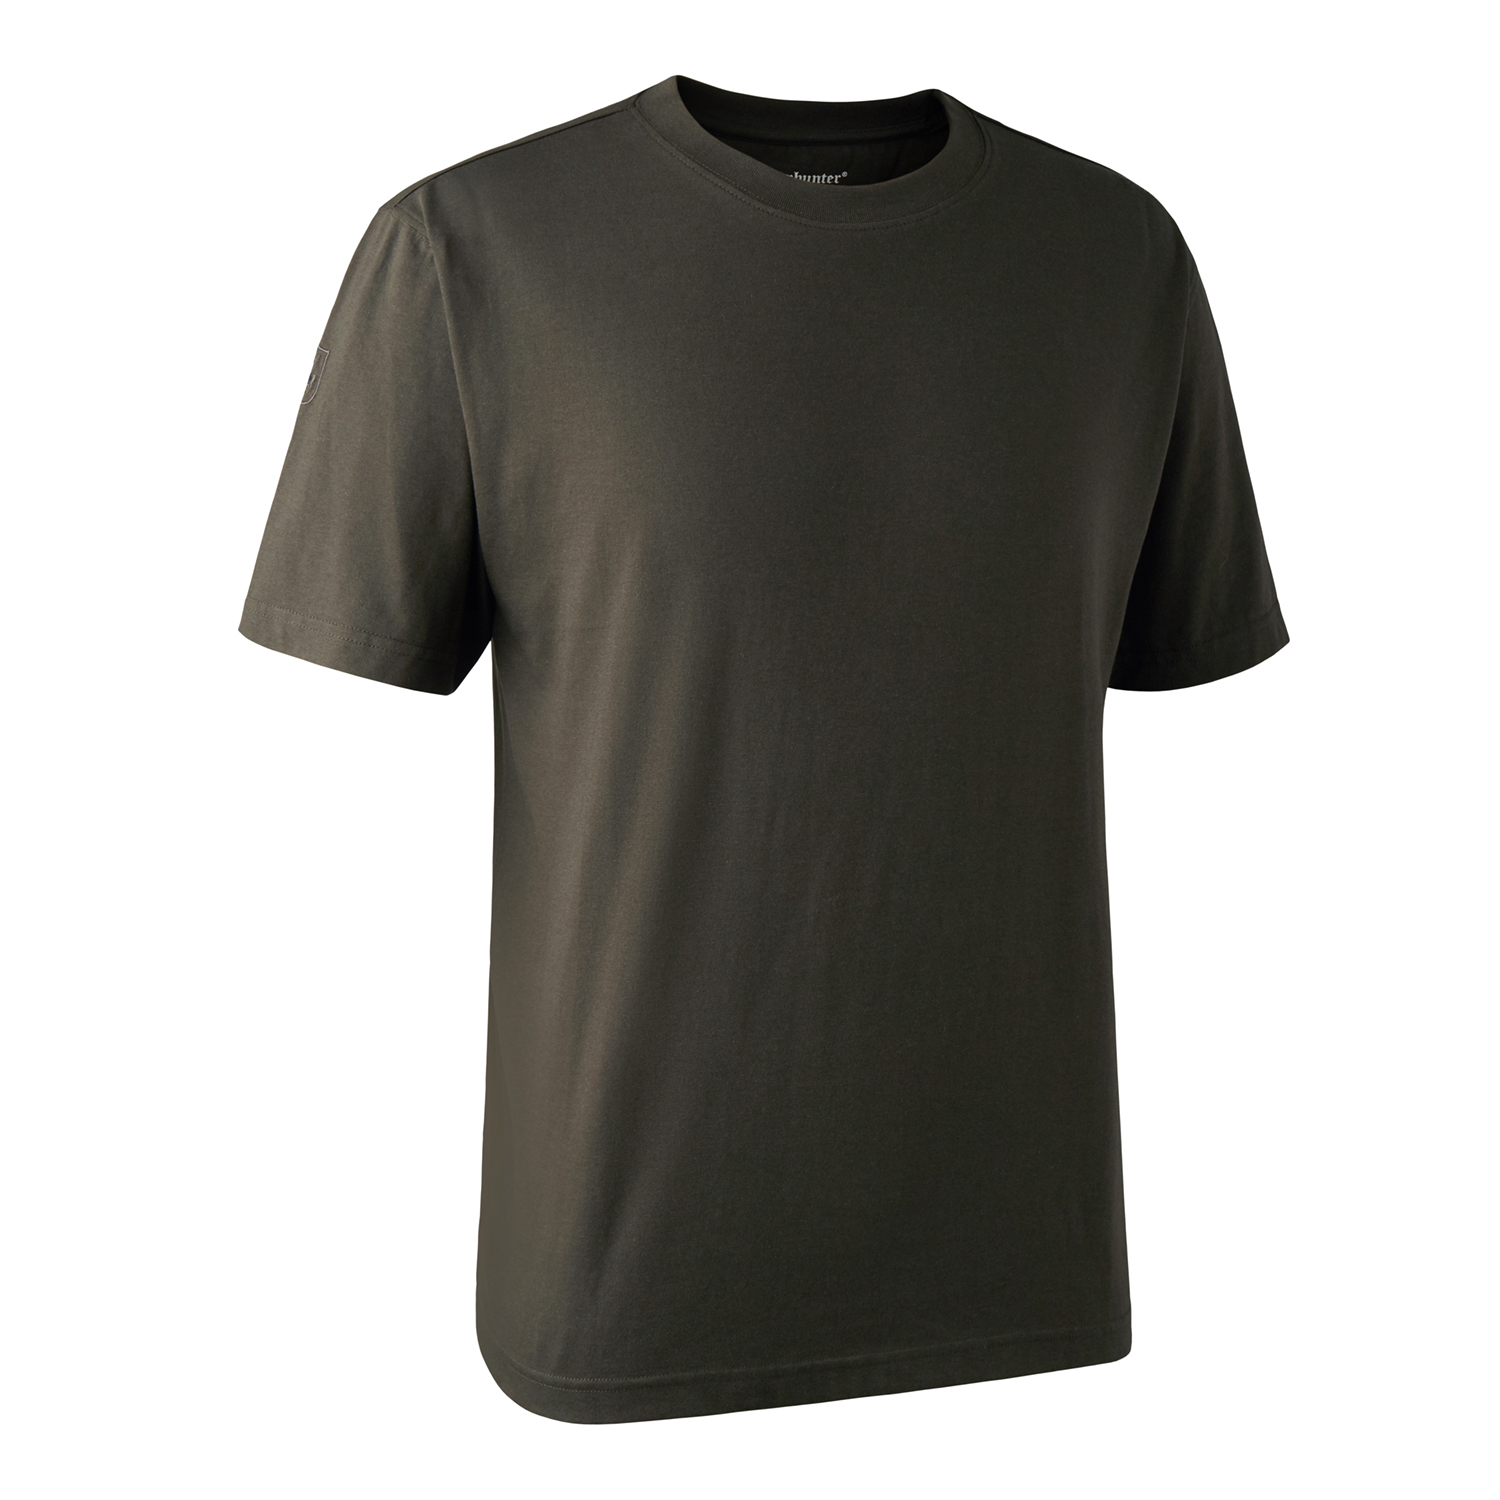 Swindon T-Shirt - Bark Green - 3XL thumbnail